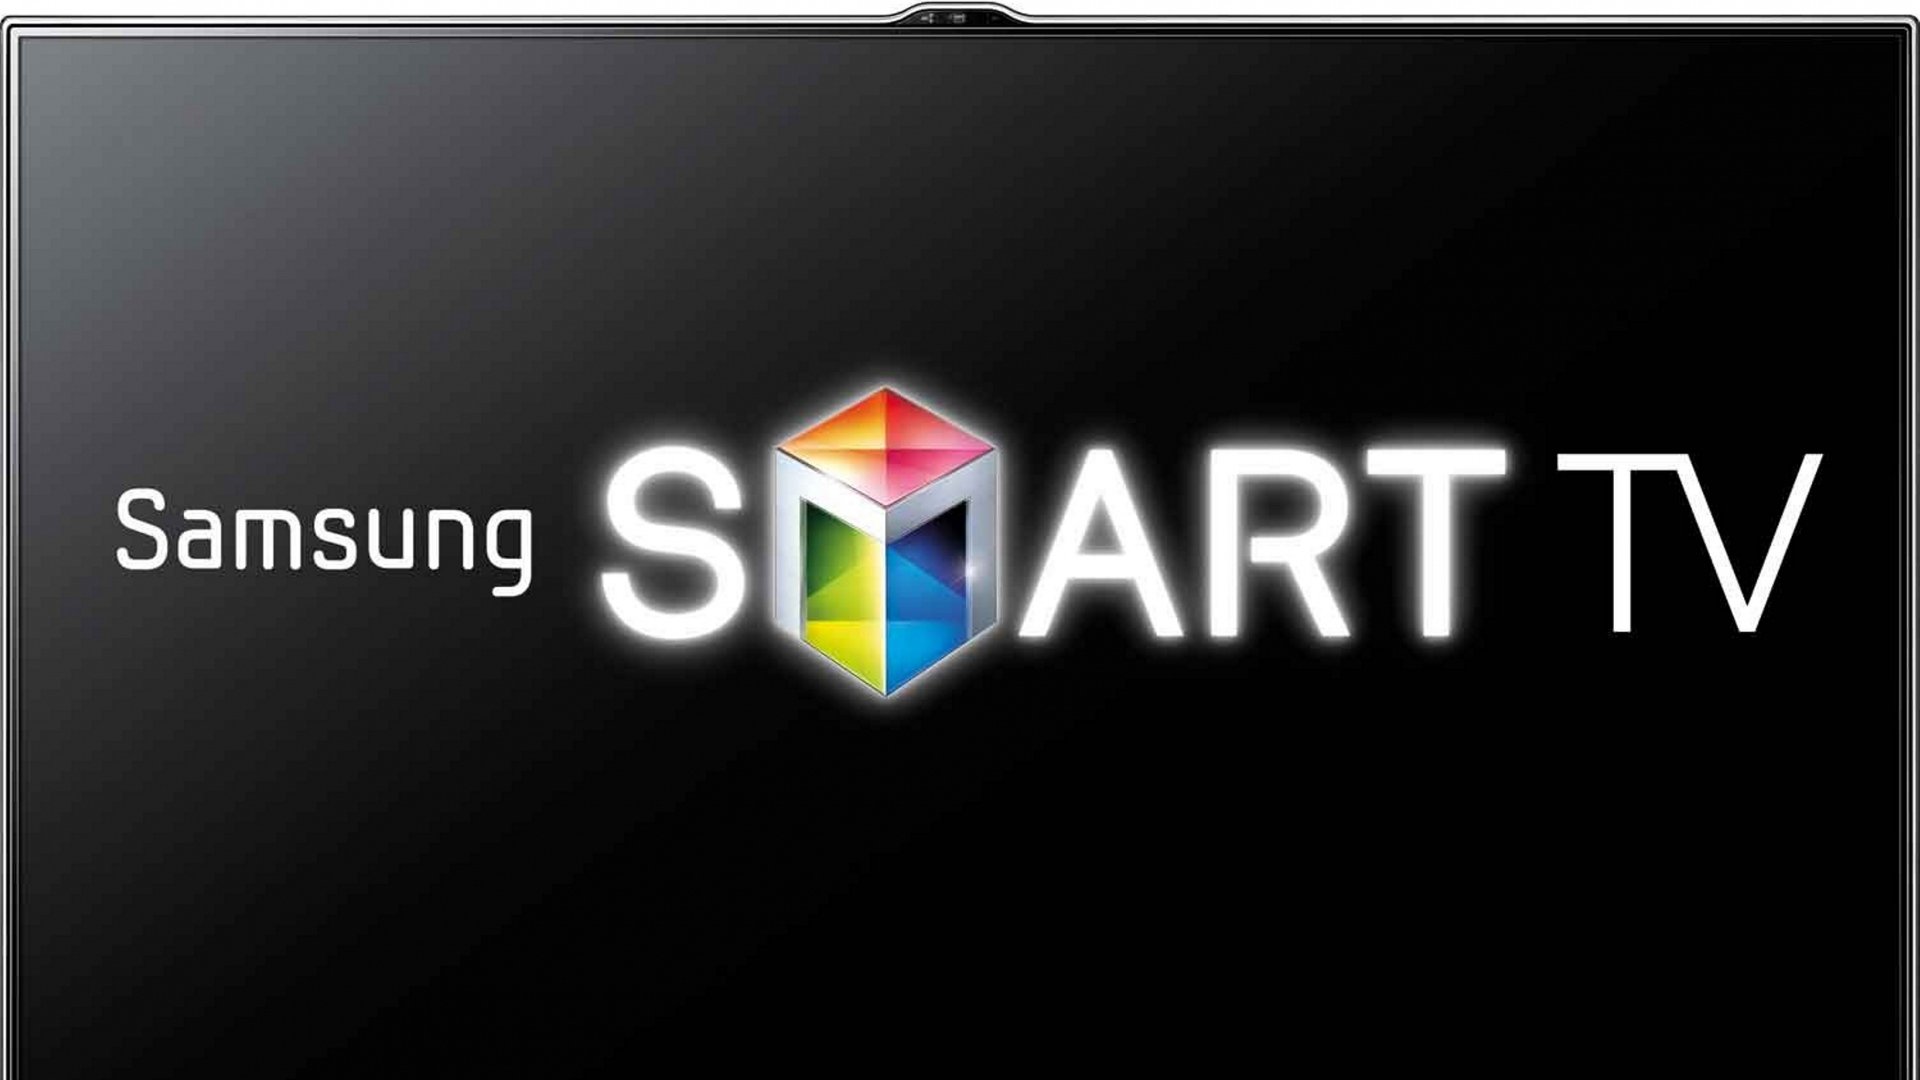 Download Wallpaper 1920x1080 Samsung Smart Tv Full HD 1080p HD